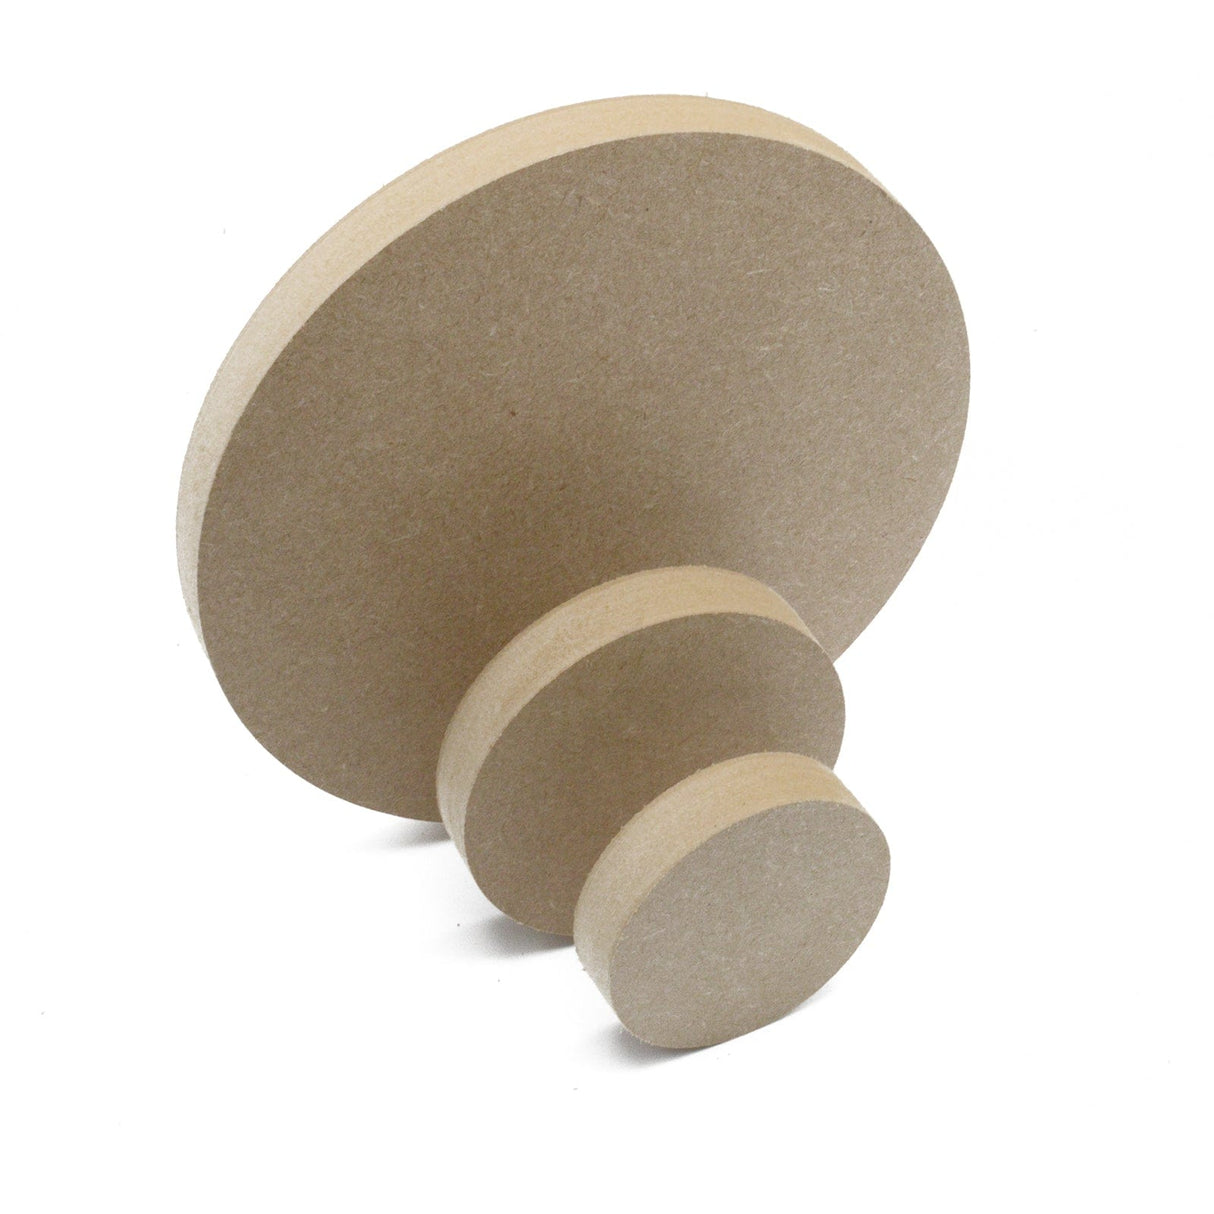 Laserworksuk Wooden Craft Shapes Freestanding Circle Blanks - Round Wooden Shapes